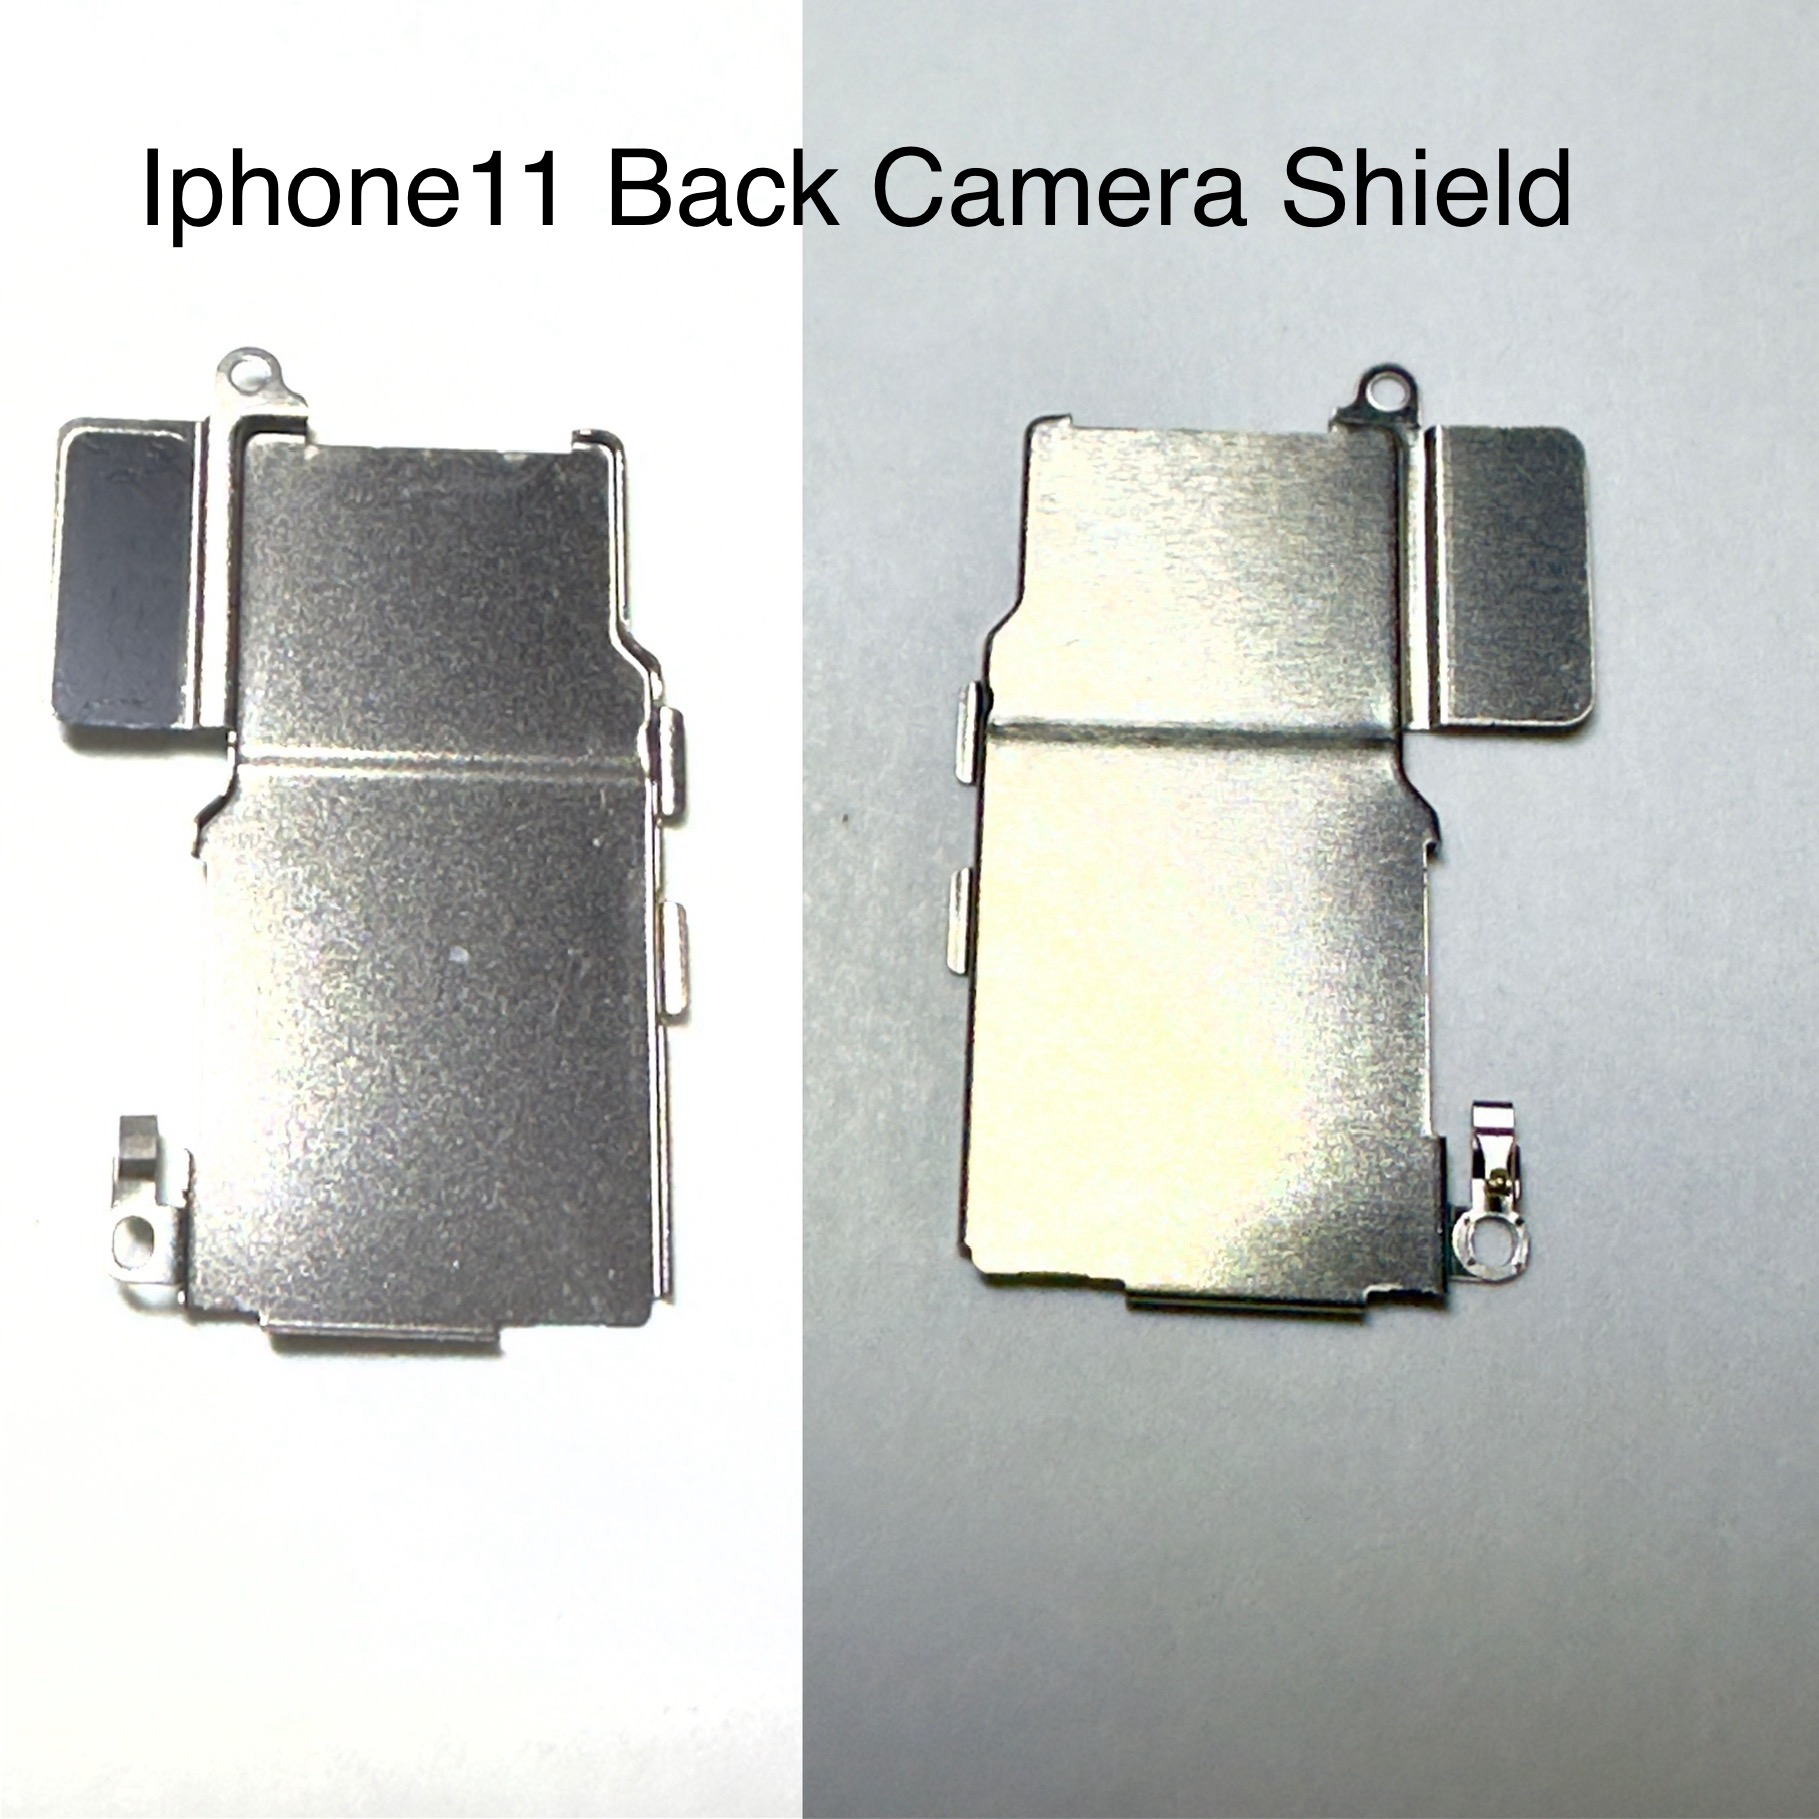 iphone11 back camera shield